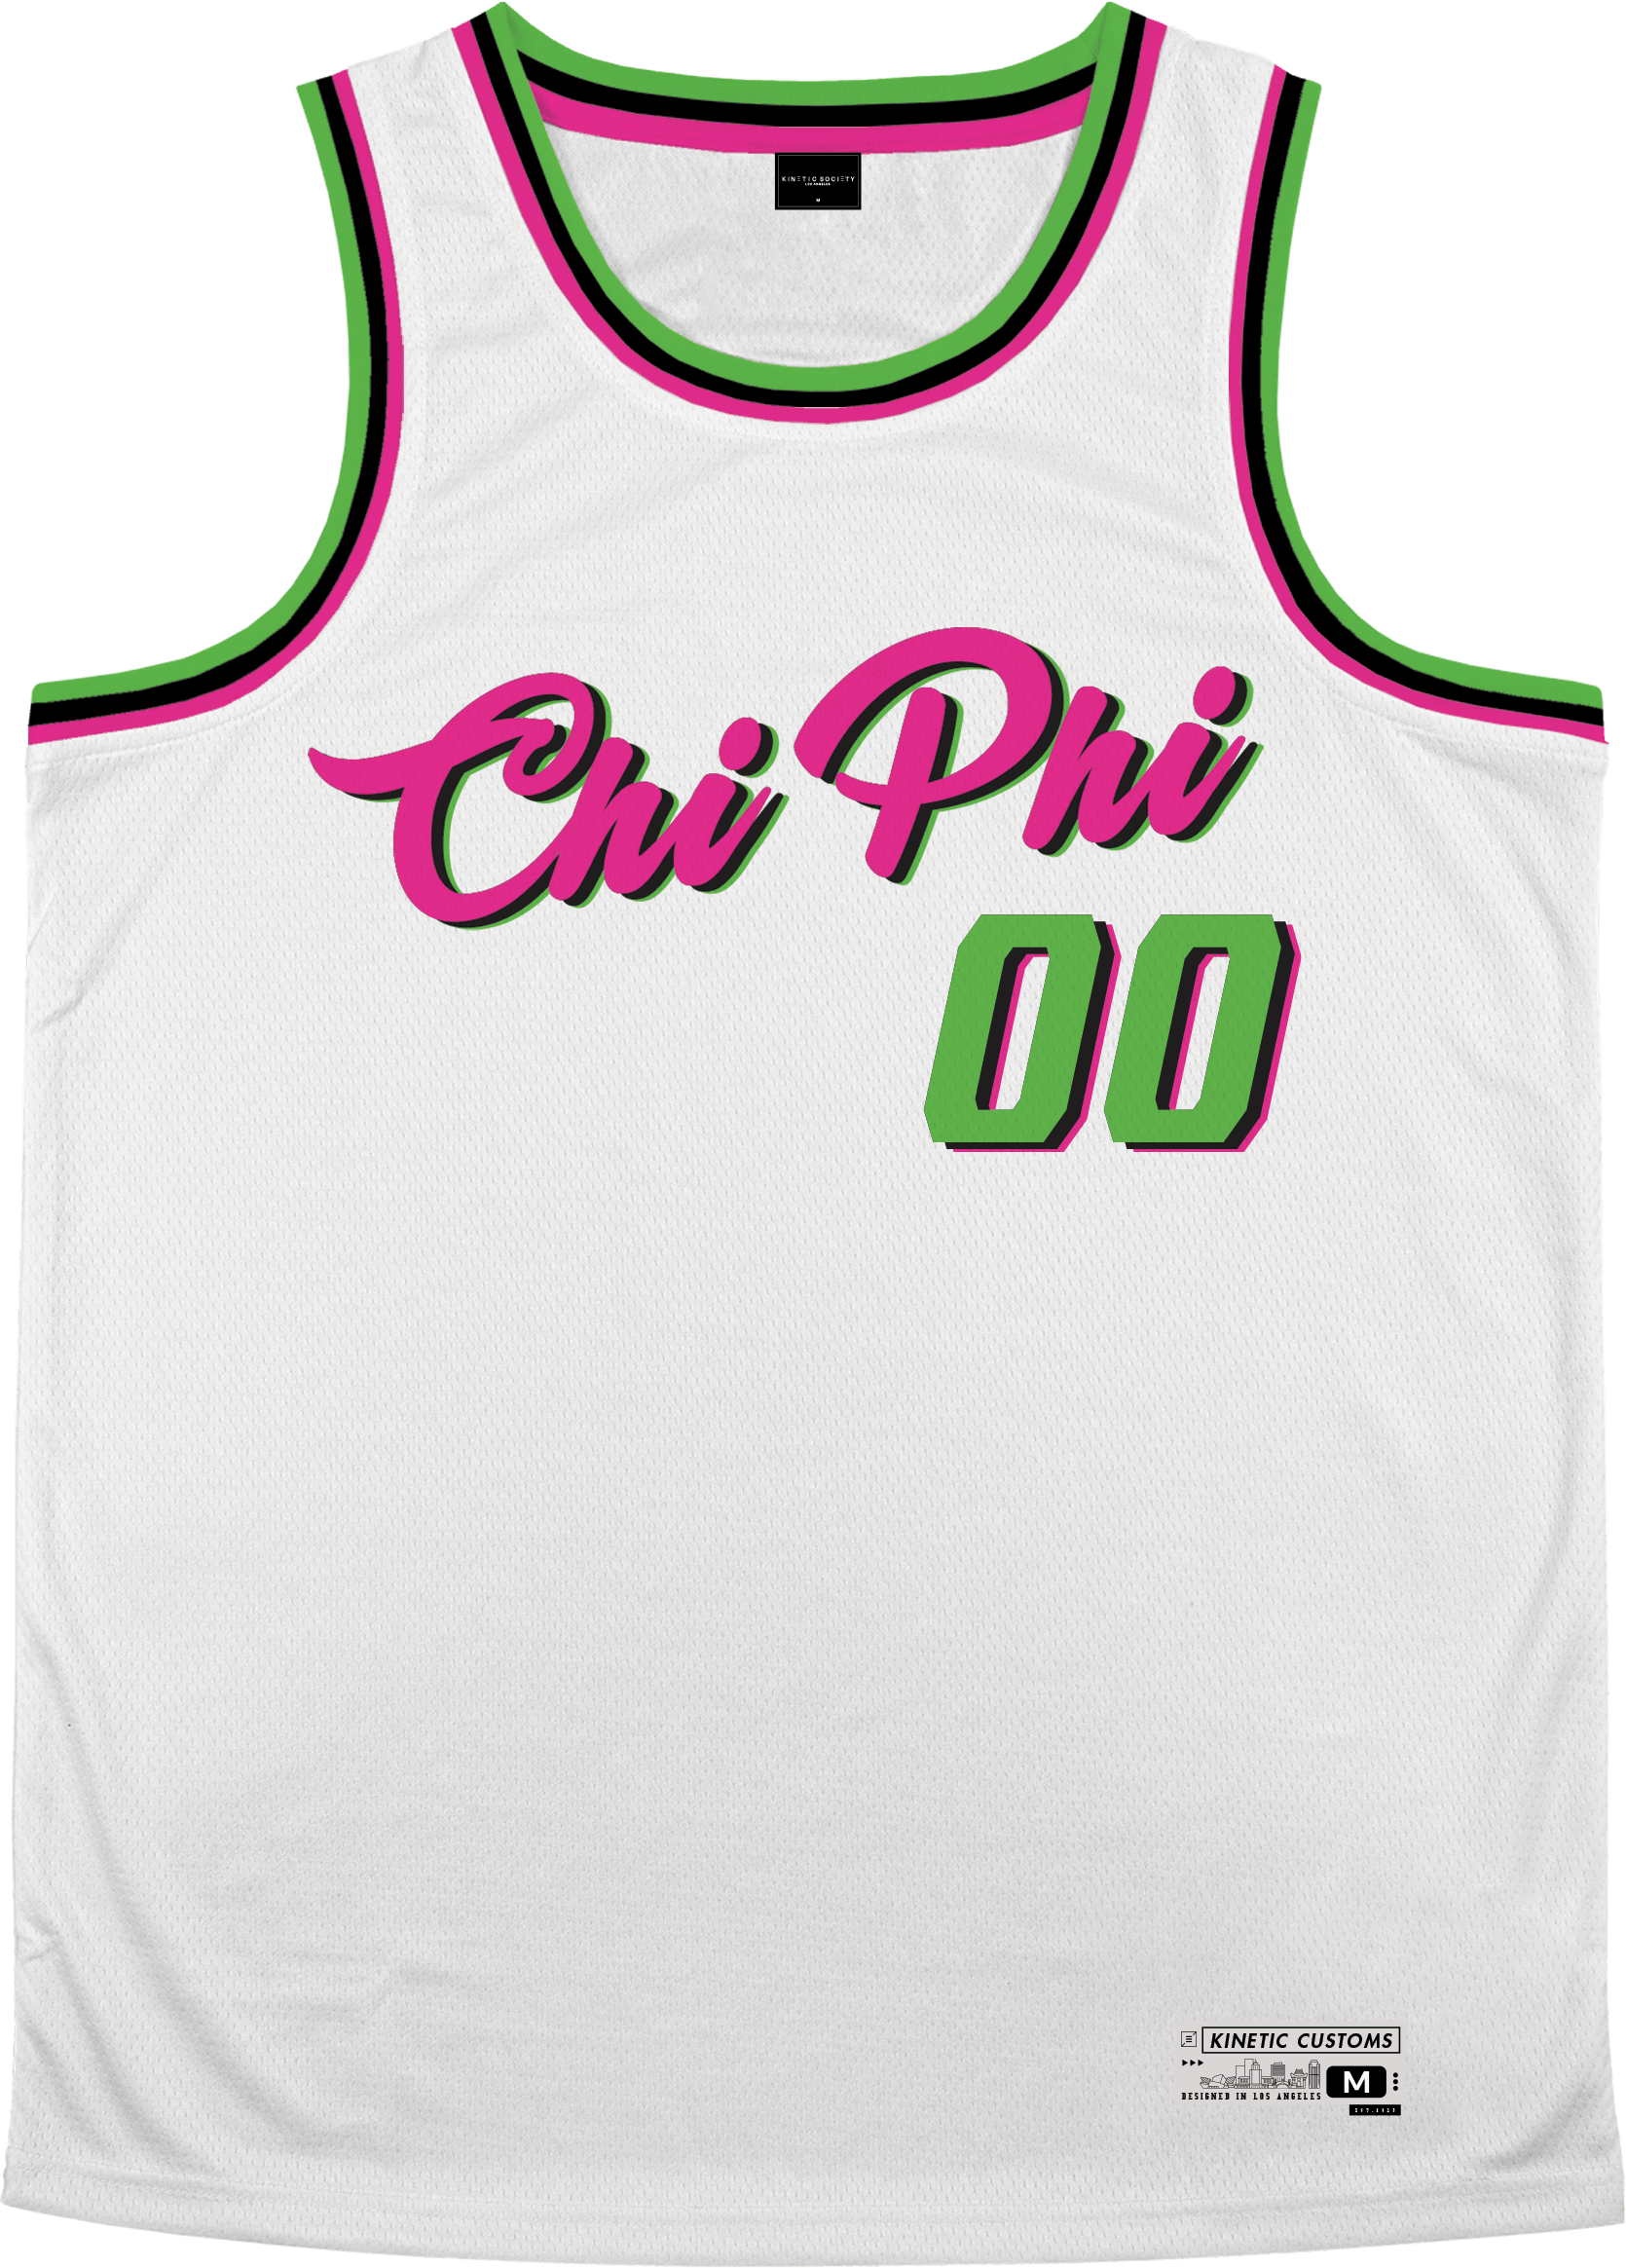 Chi Phi - Bubble Gum Basketball Jersey Premium Basketball Kinetic Society LLC 